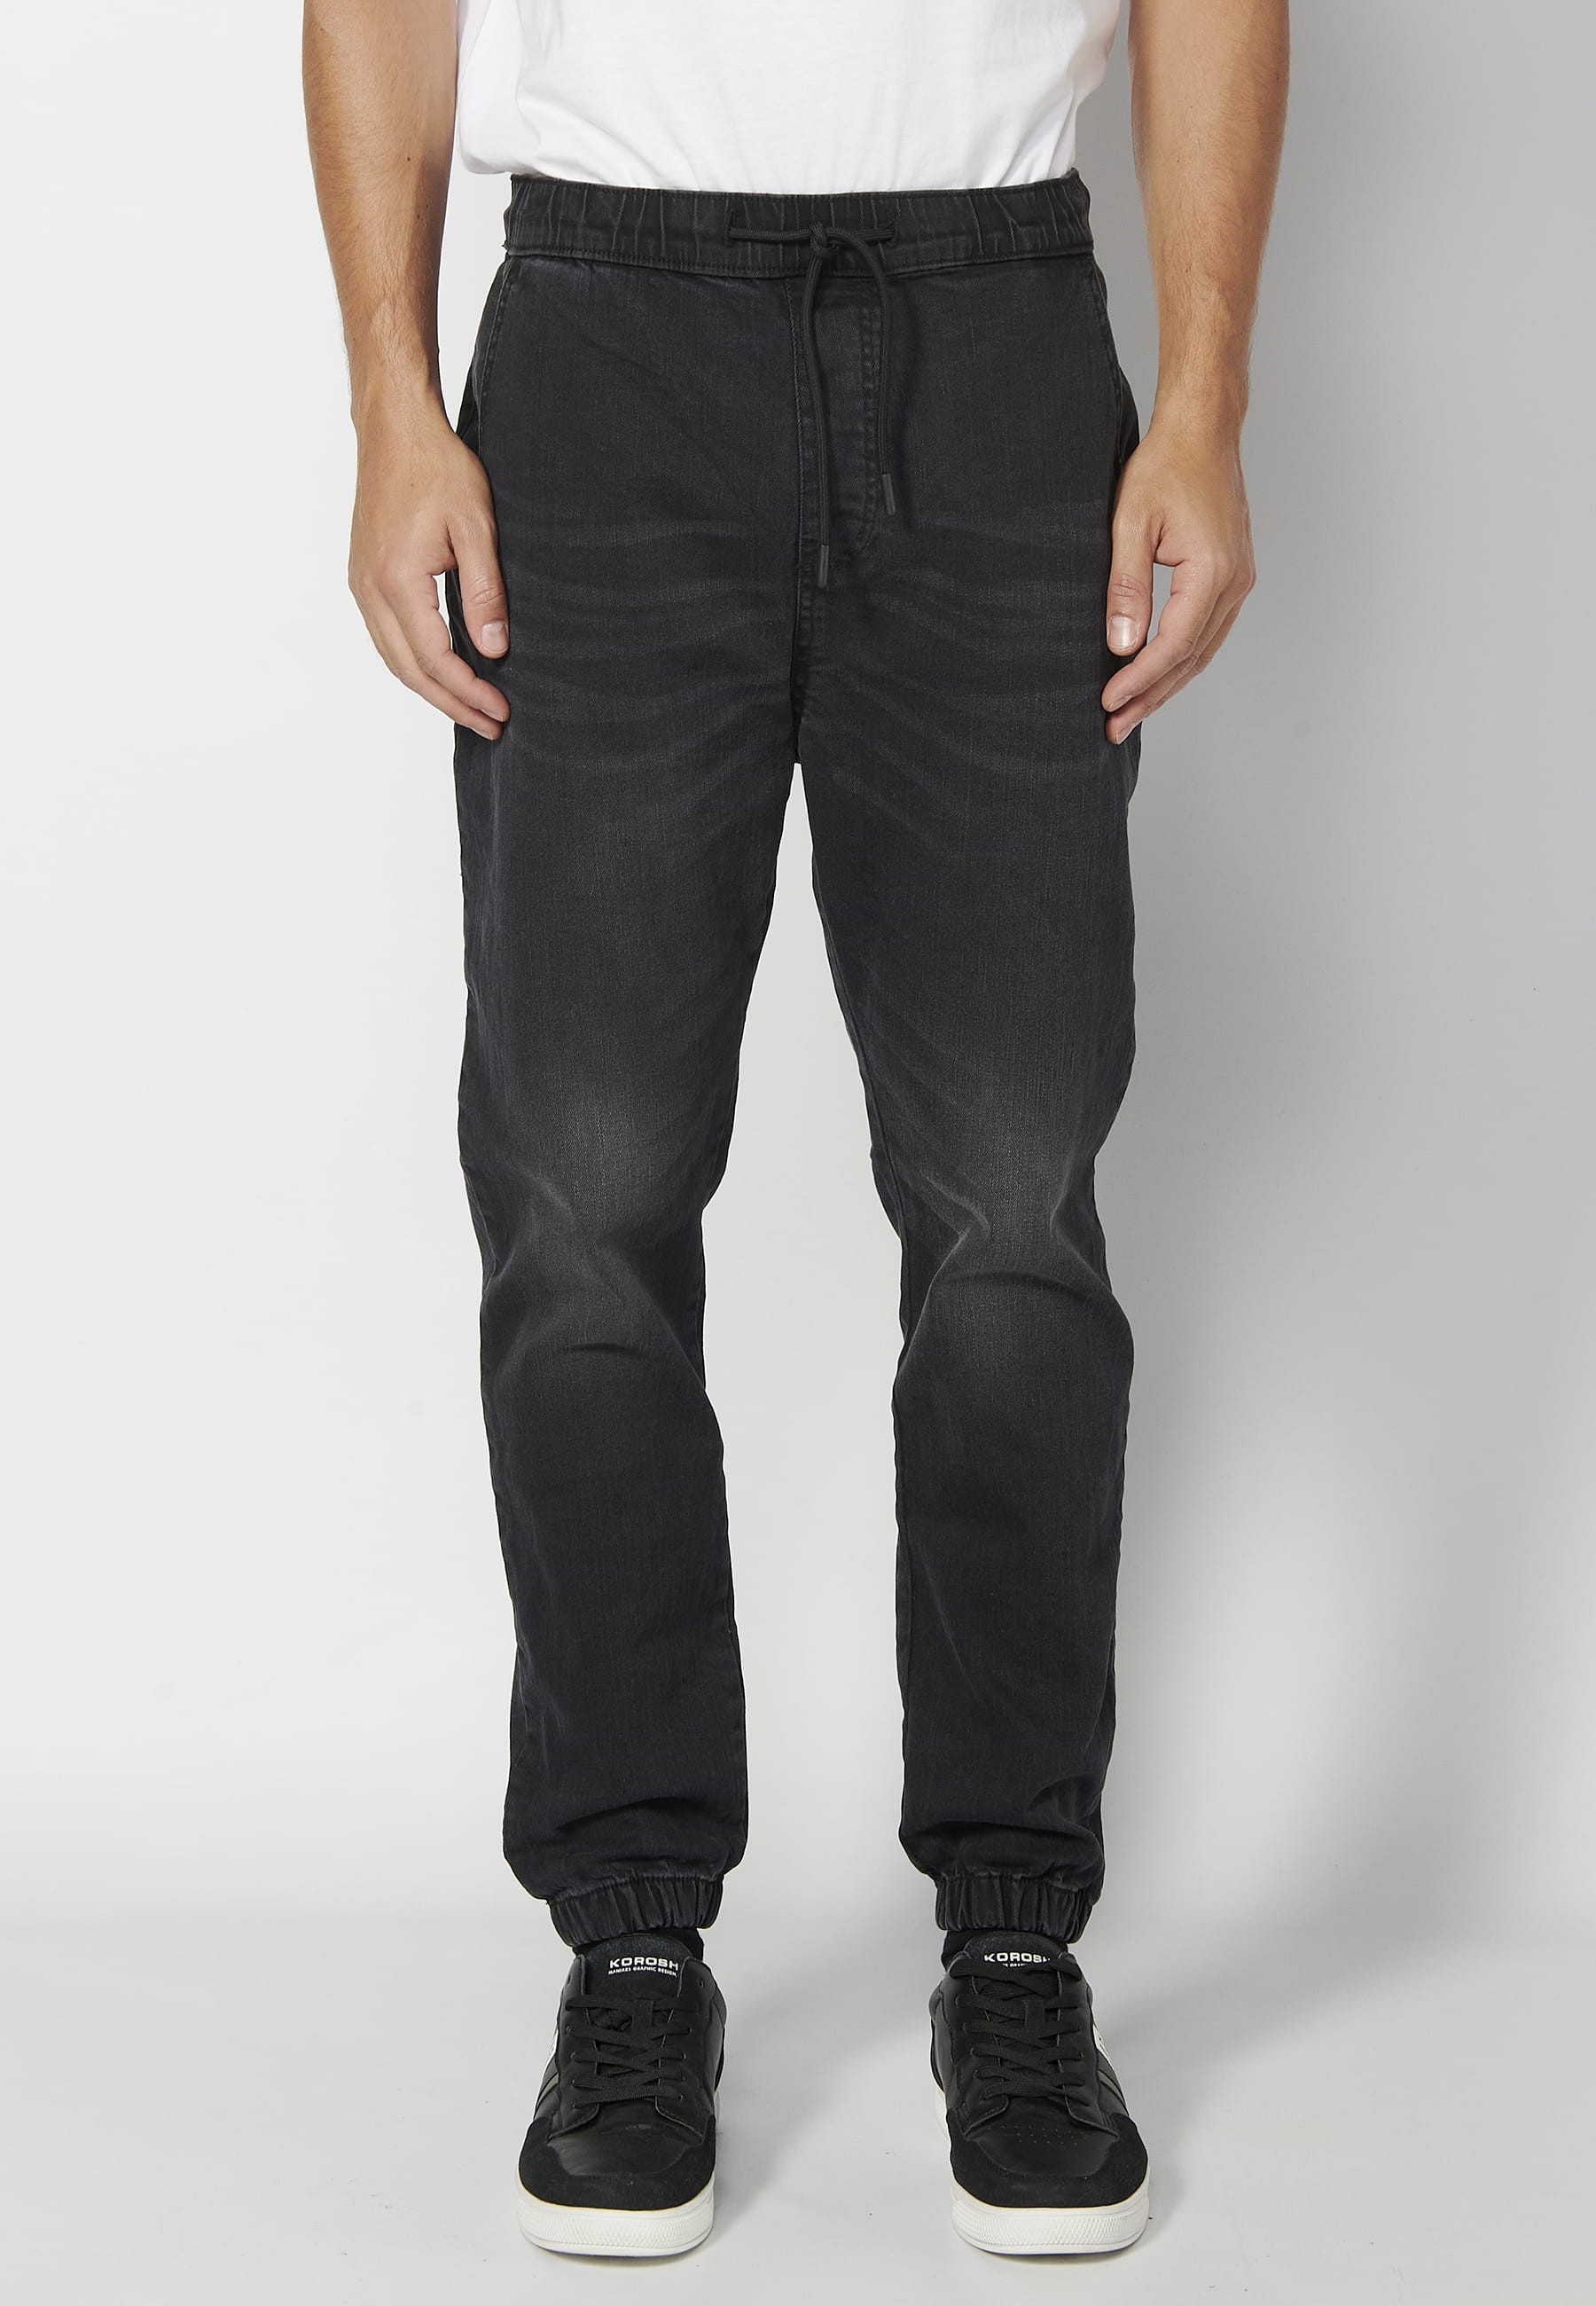 Black elastic waist long jogger pants for Men 2